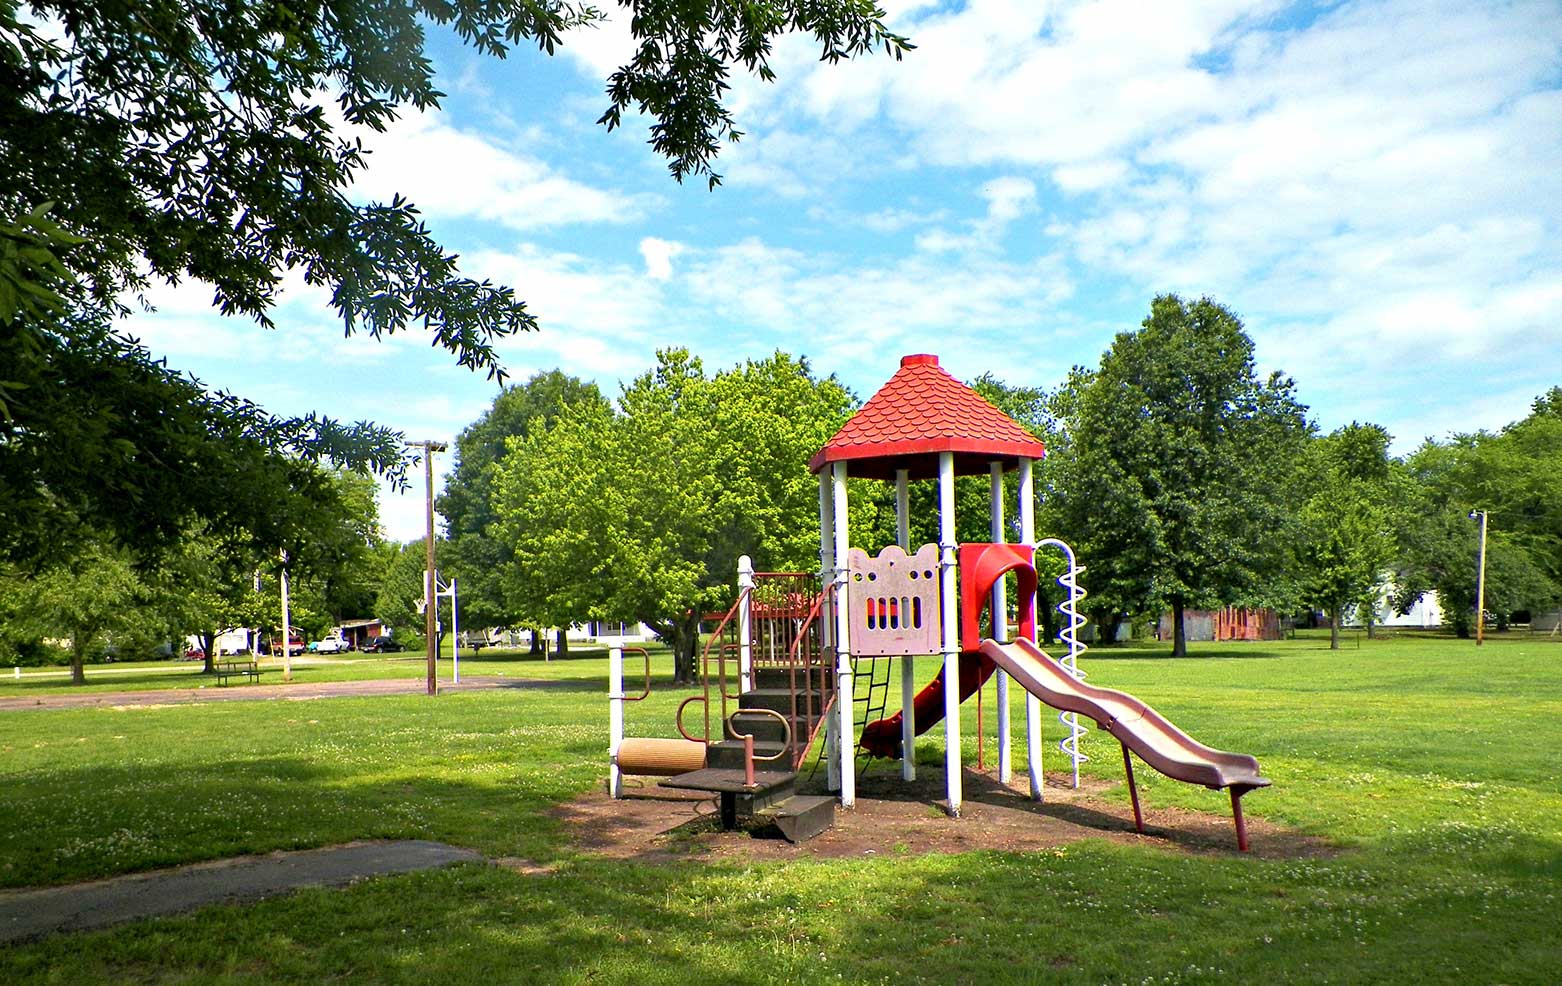 Indian Park - Playground